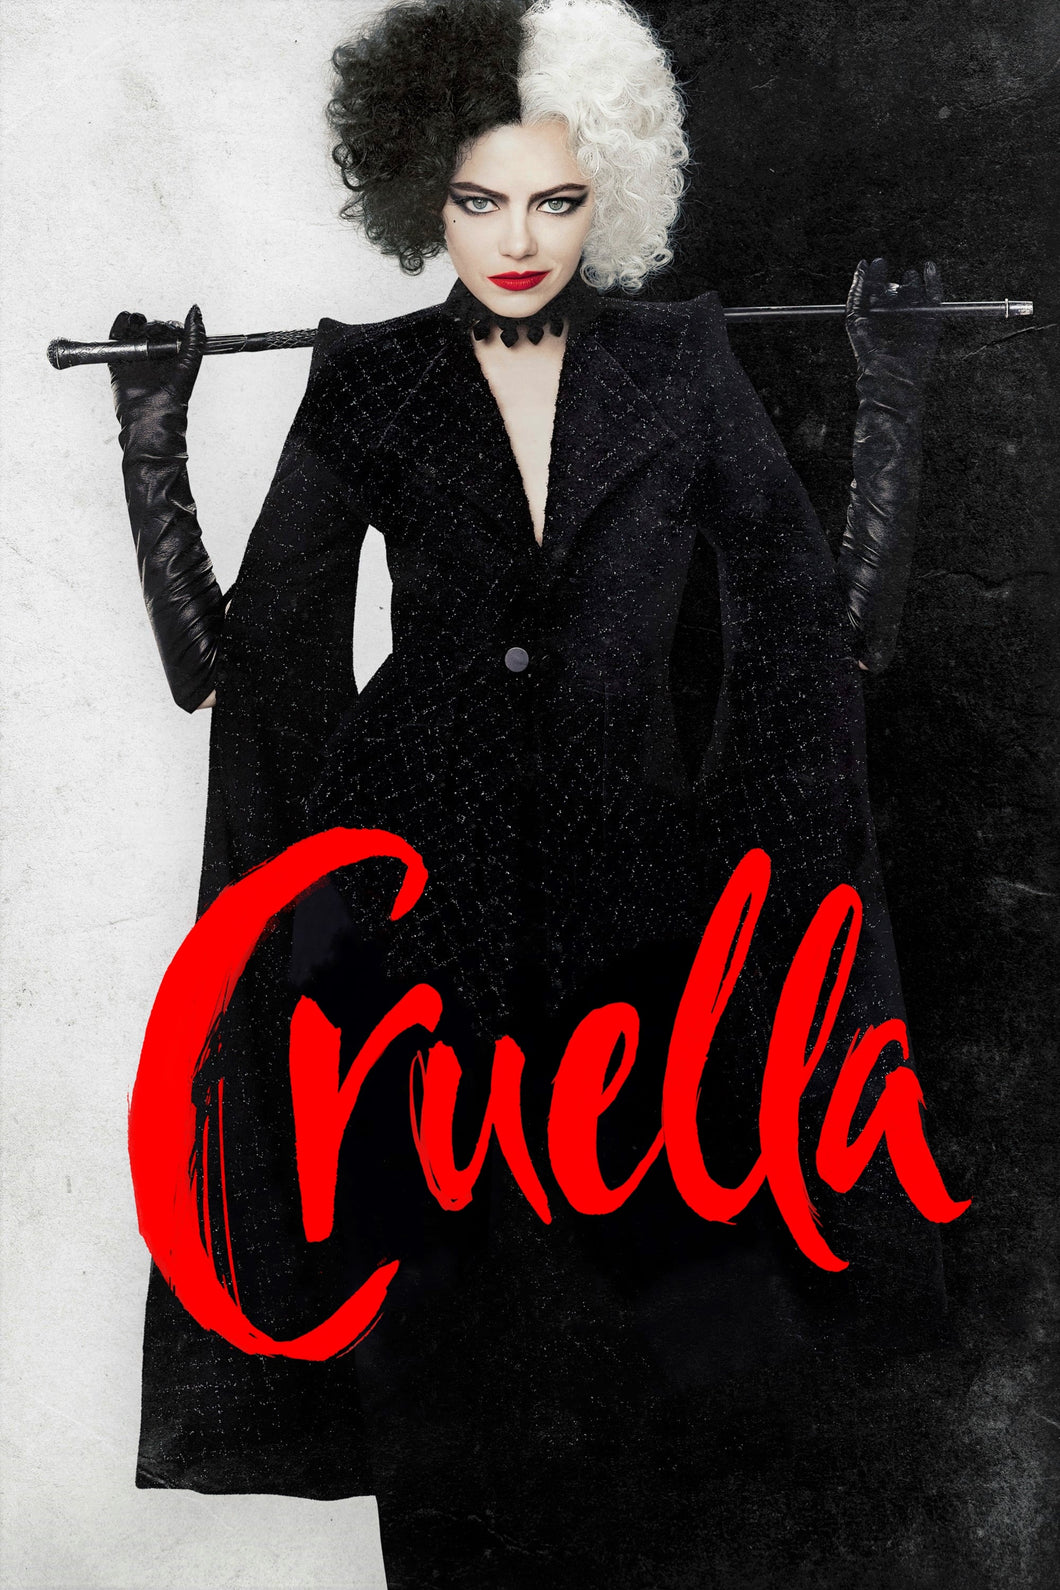 Cruella (2021) Movie Poster High Quality Glossy Paper A1 A2 A3 A4 A3 Framed A4 F